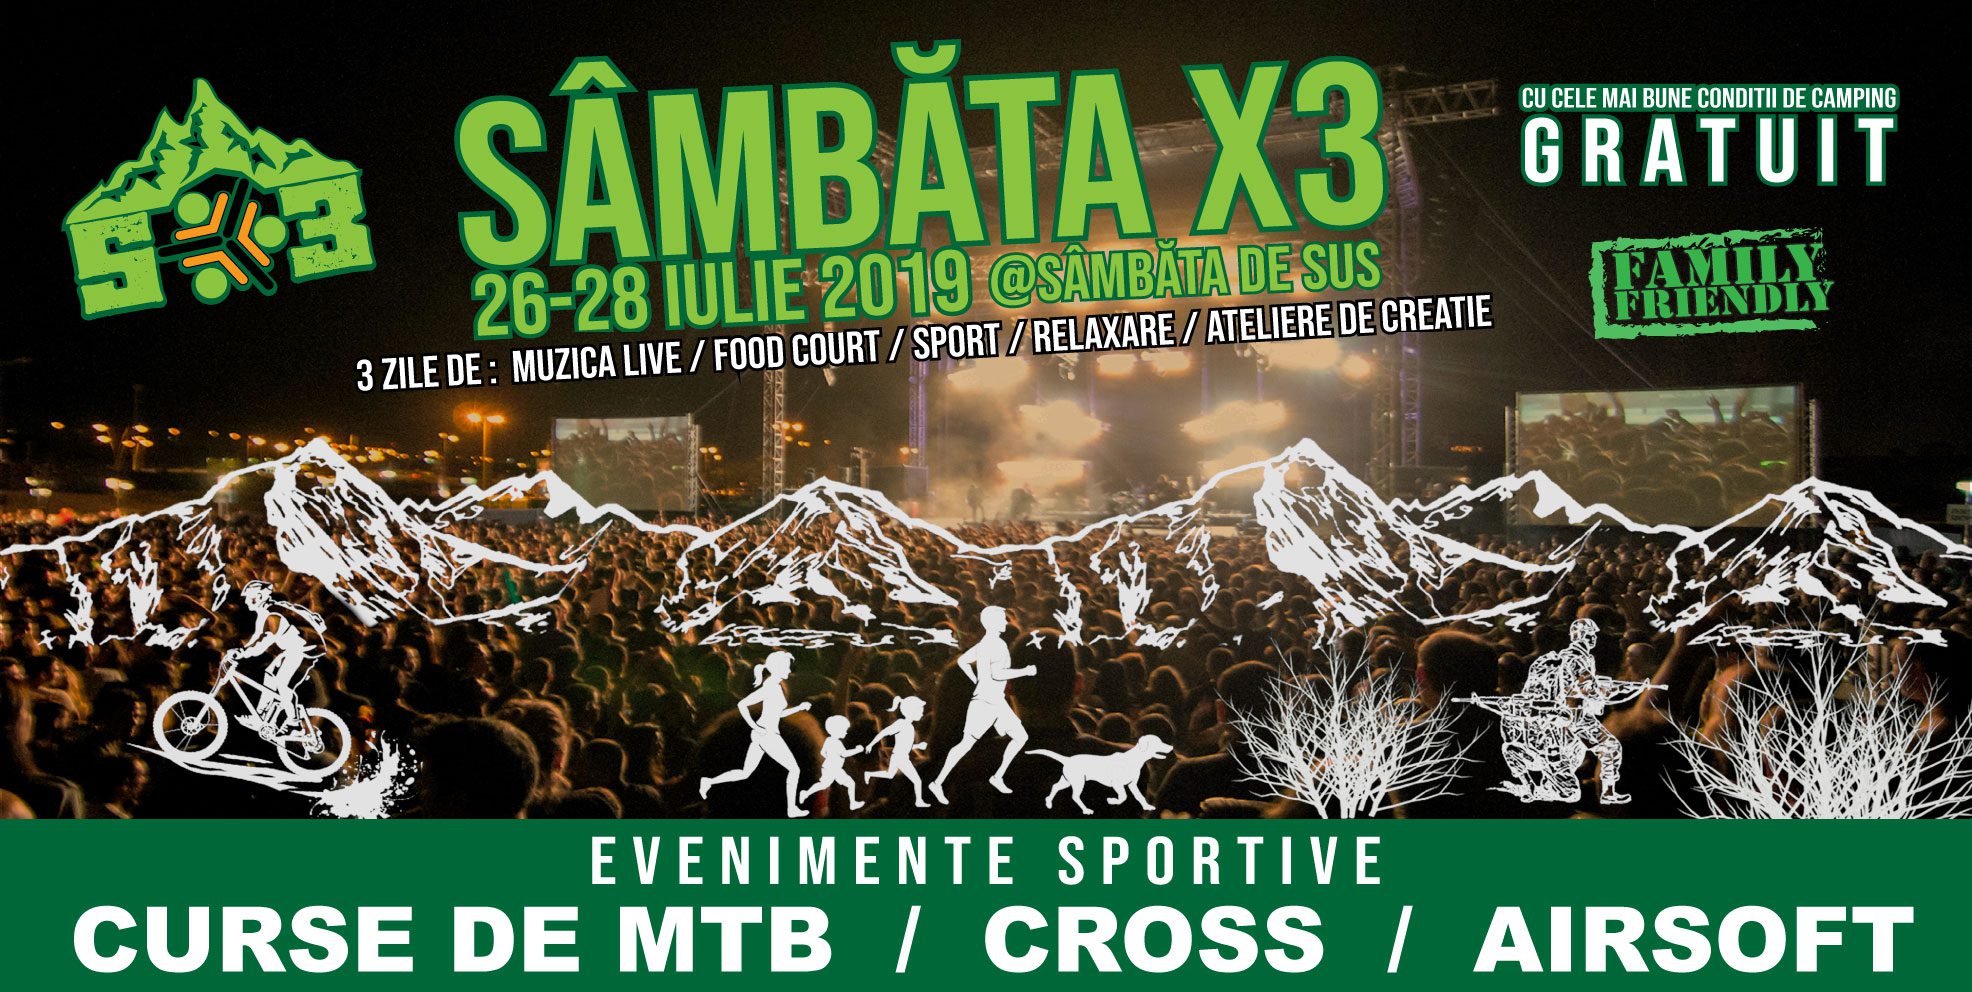  Festivalul sportiv Sambata X3 2019